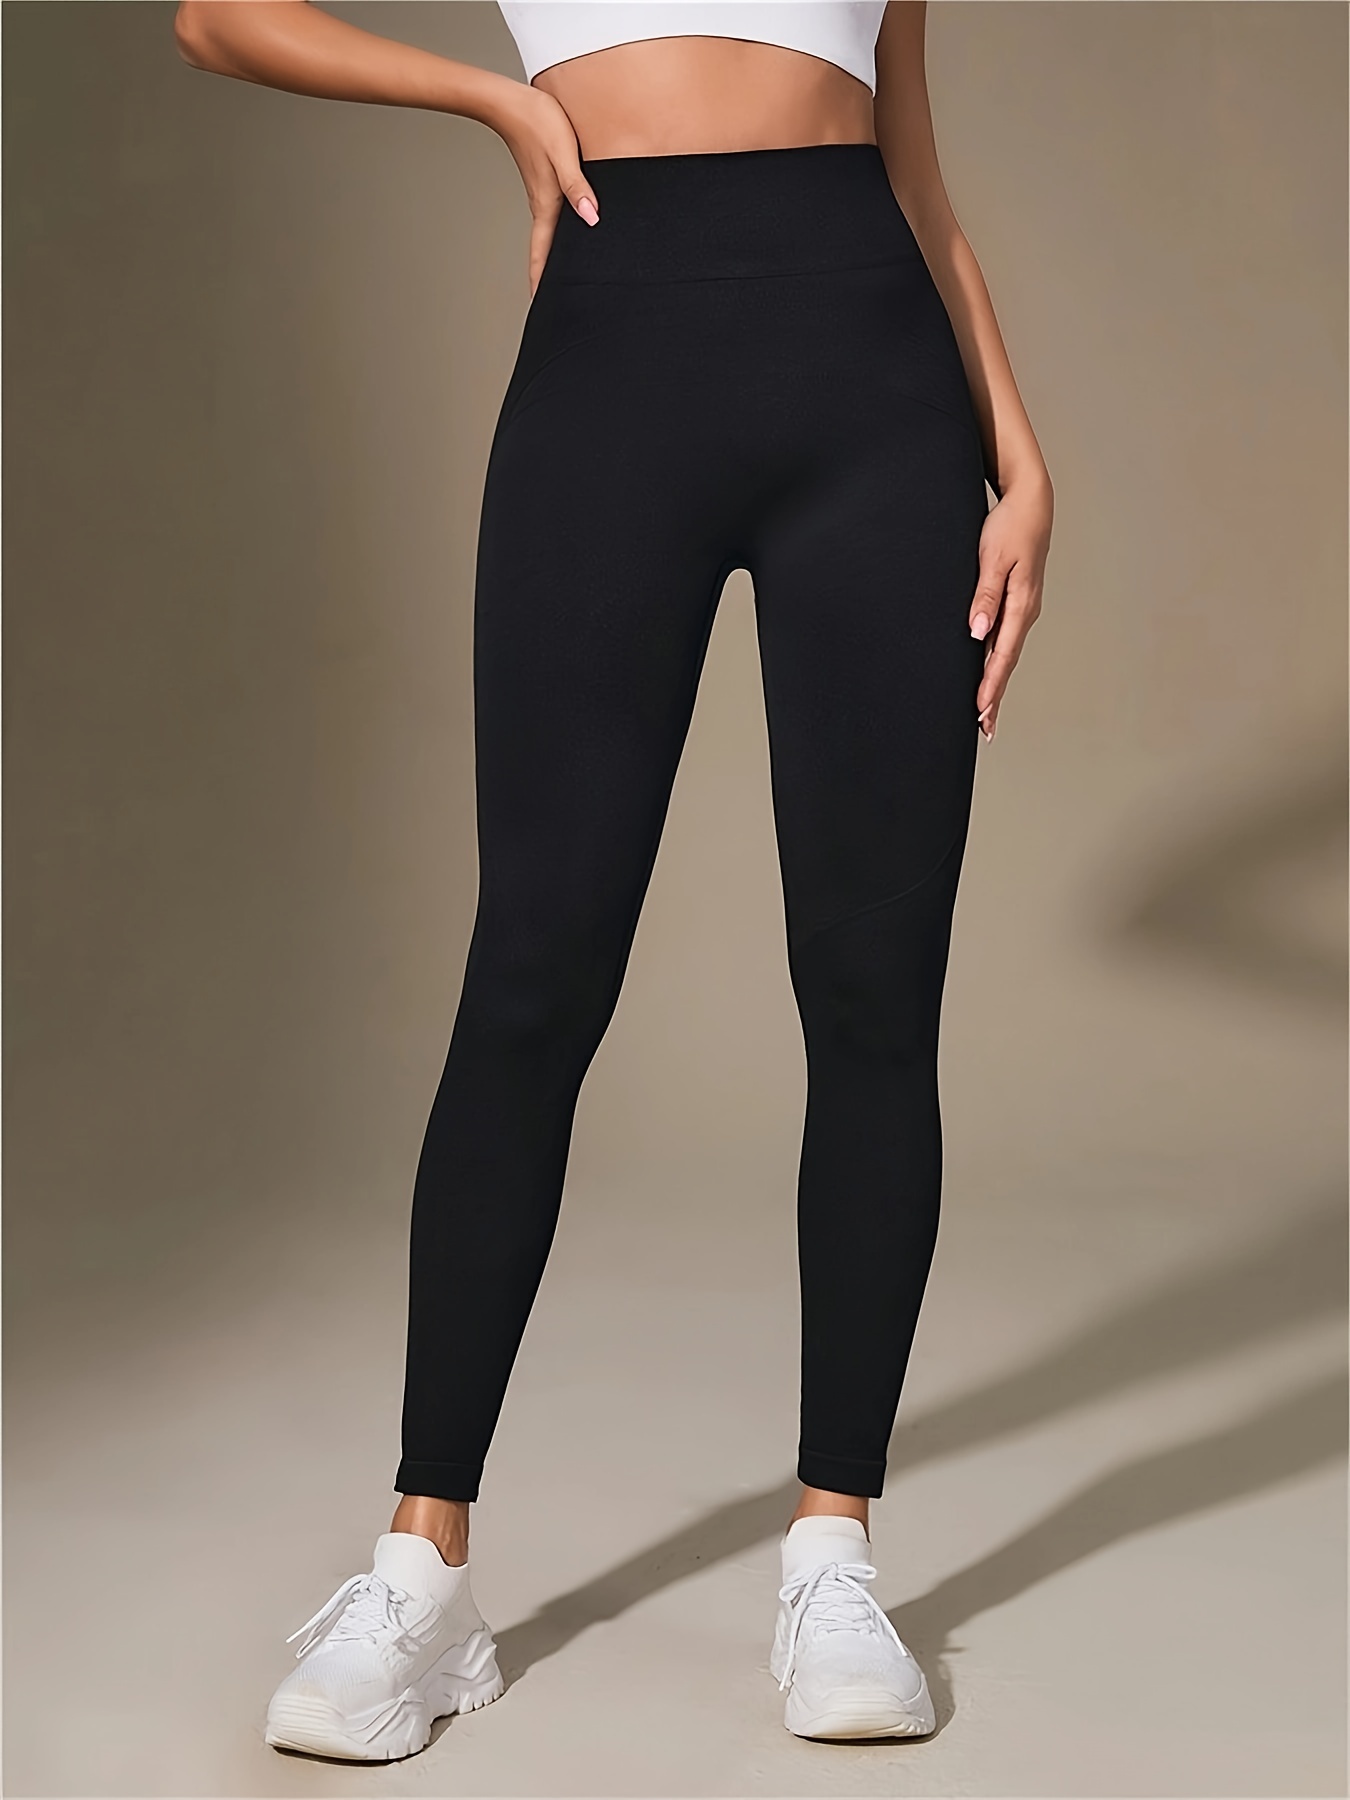 Women Bow Digital Printing Fitness Pants Elastic Slim Sexy Yoga Pants 